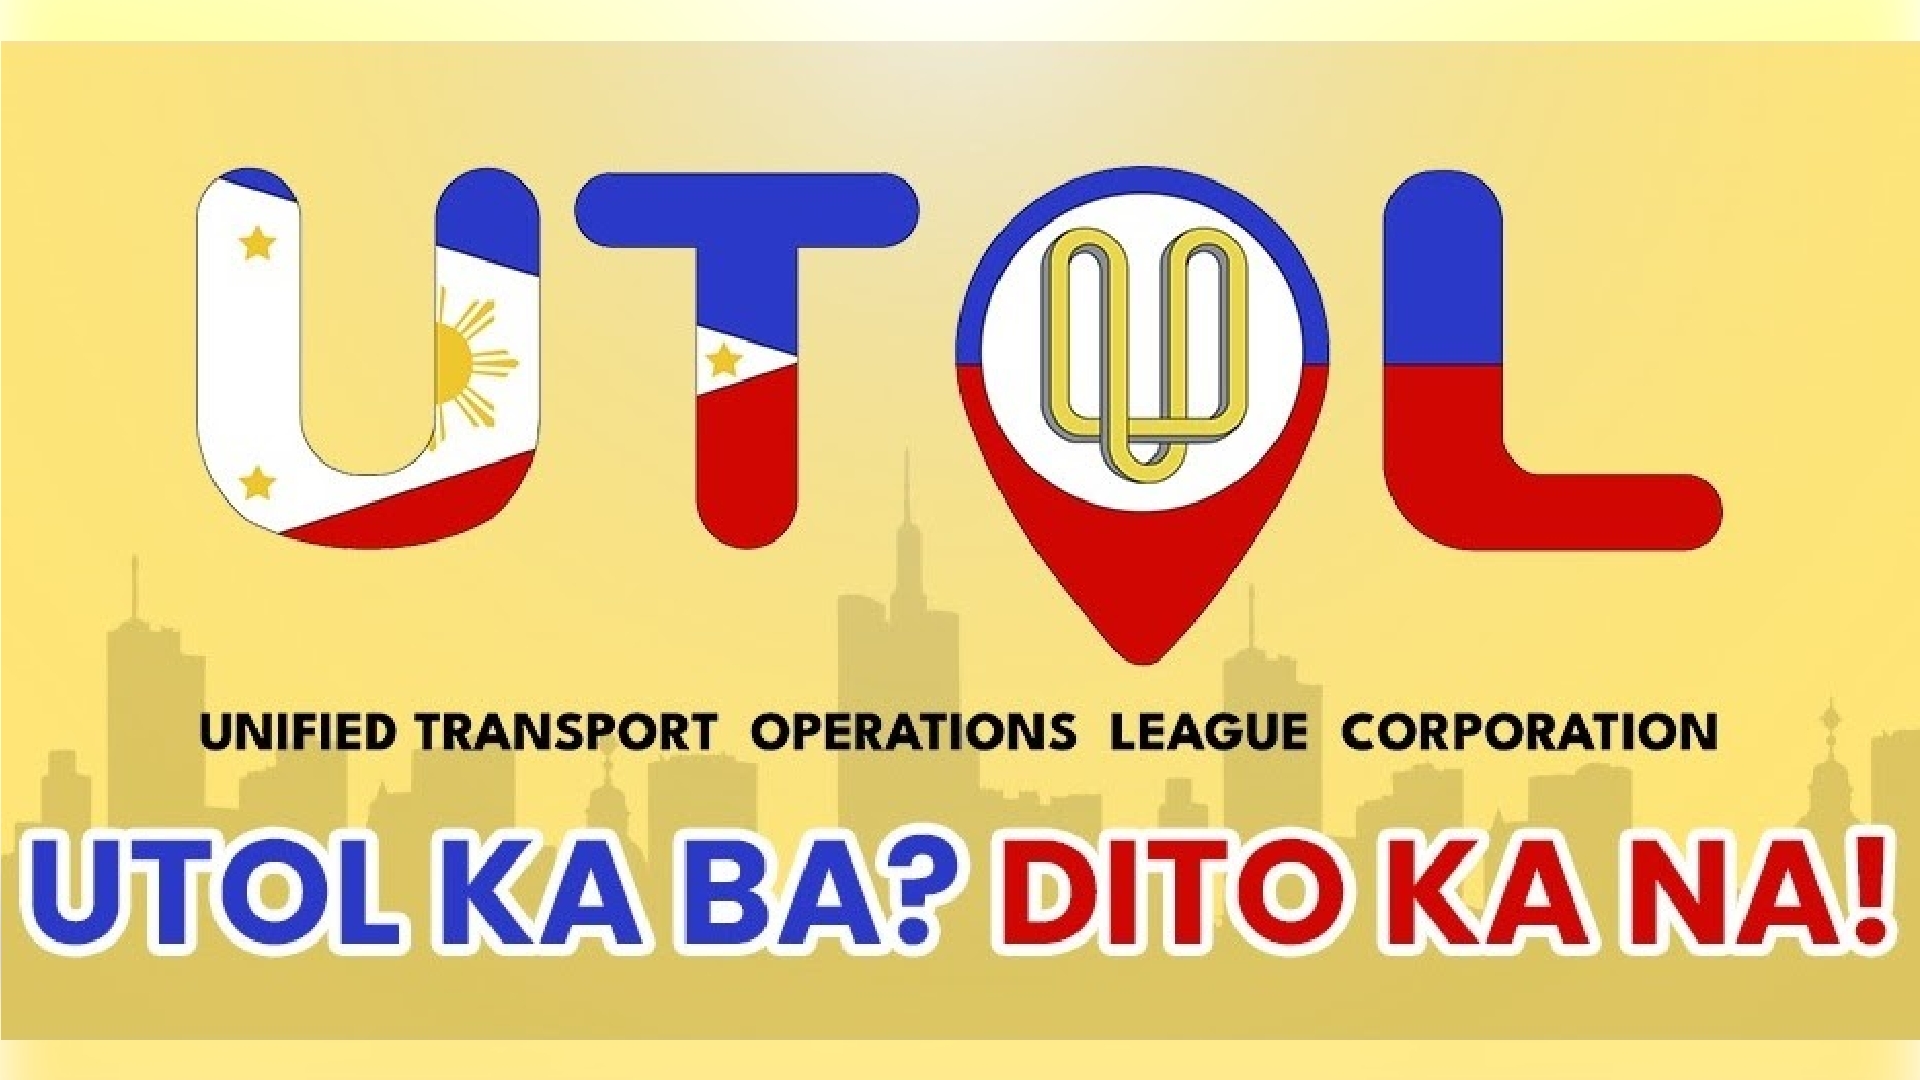 Ride-hailing service UTOL launches in Metro Manila